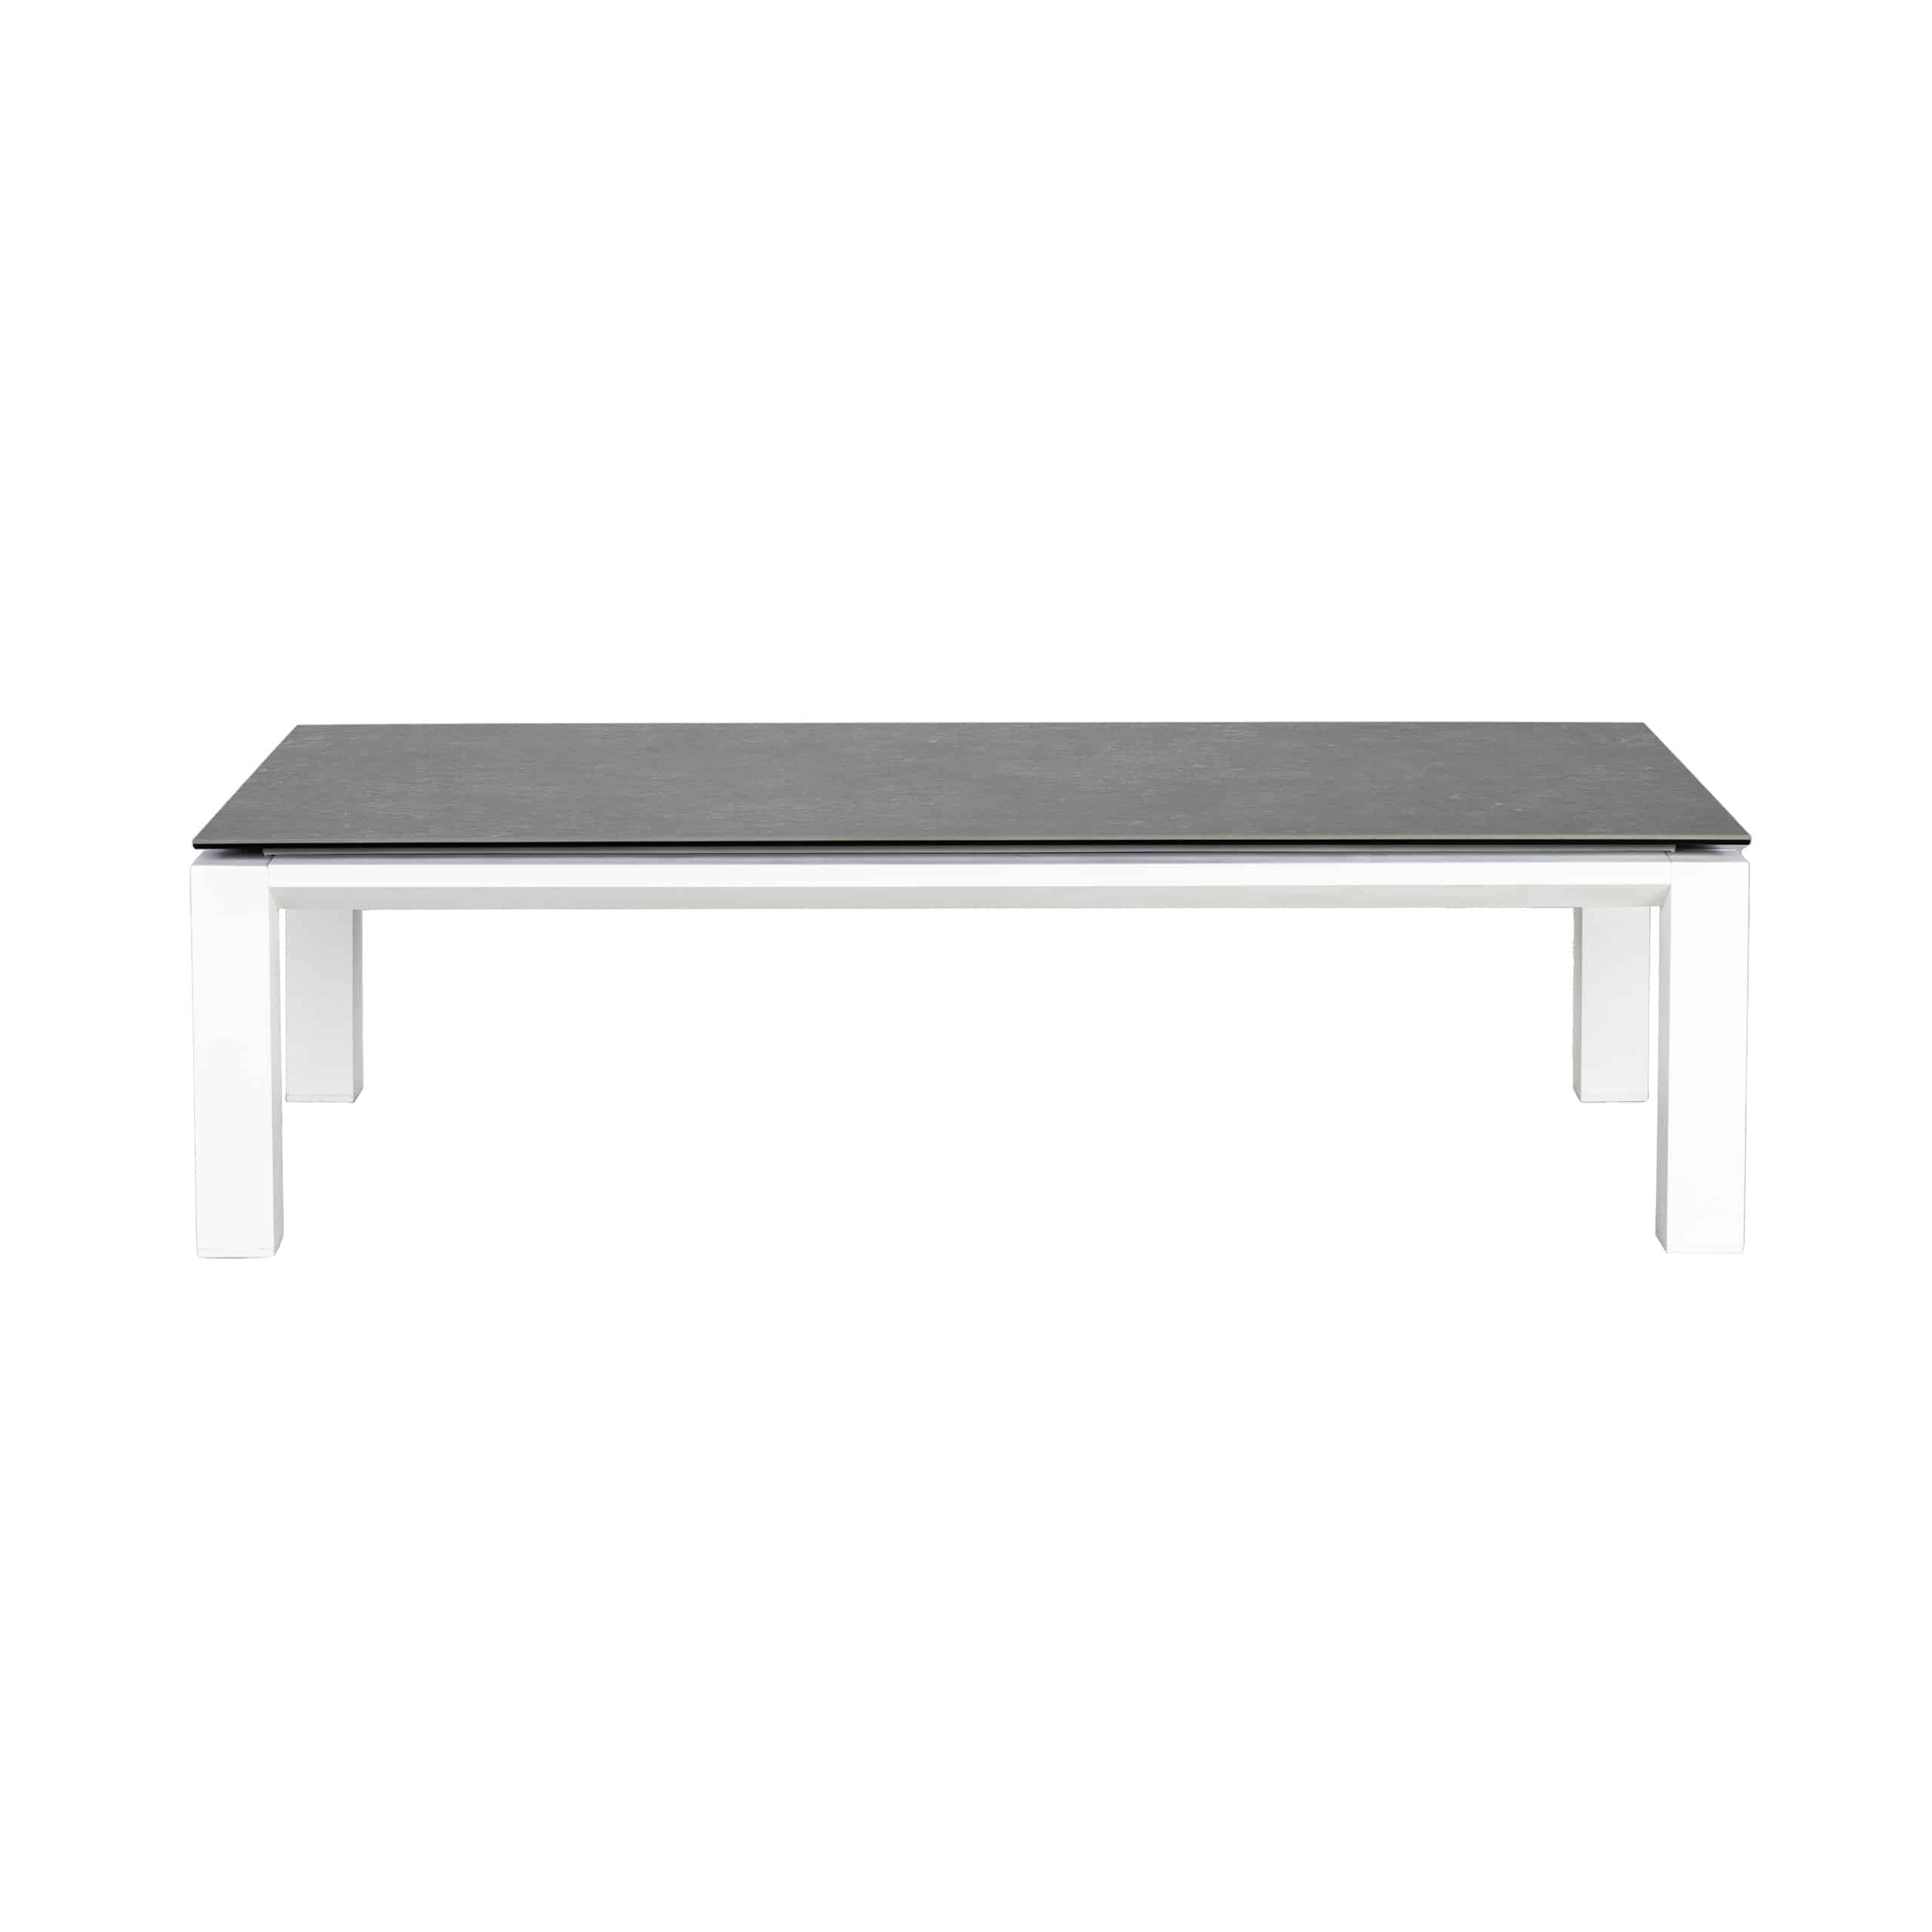 Design Warehouse - 128098 - Granada Aluminum Outdoor Coffee Table (White) with Ceramic Concrete Look Table Top 140 x 75 cm  - White